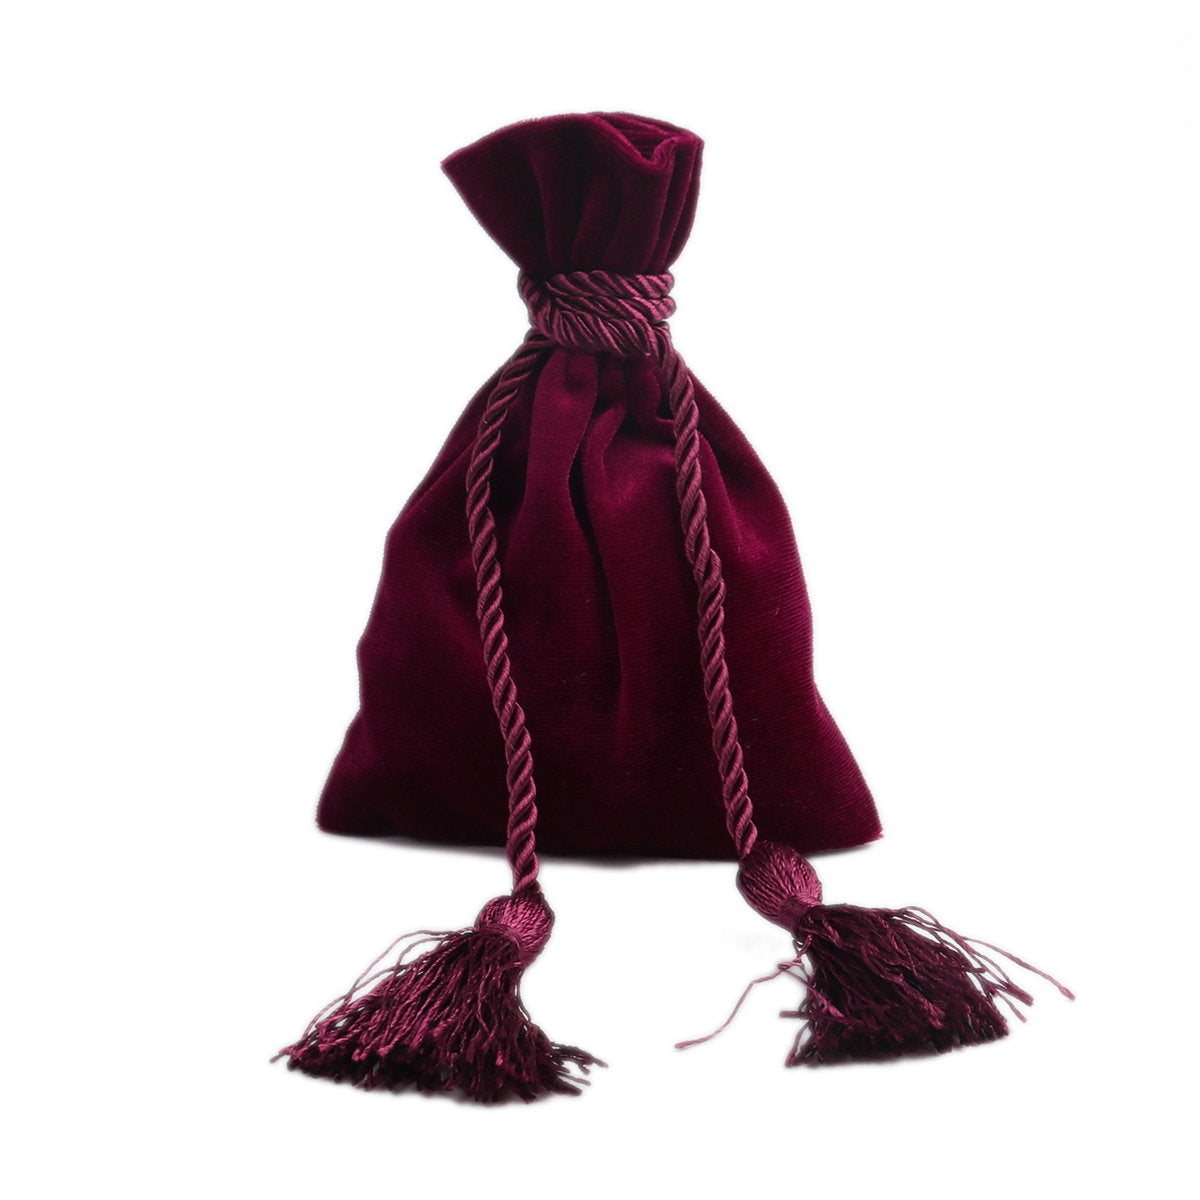 Wine red velvet pouch bag with tassel rope